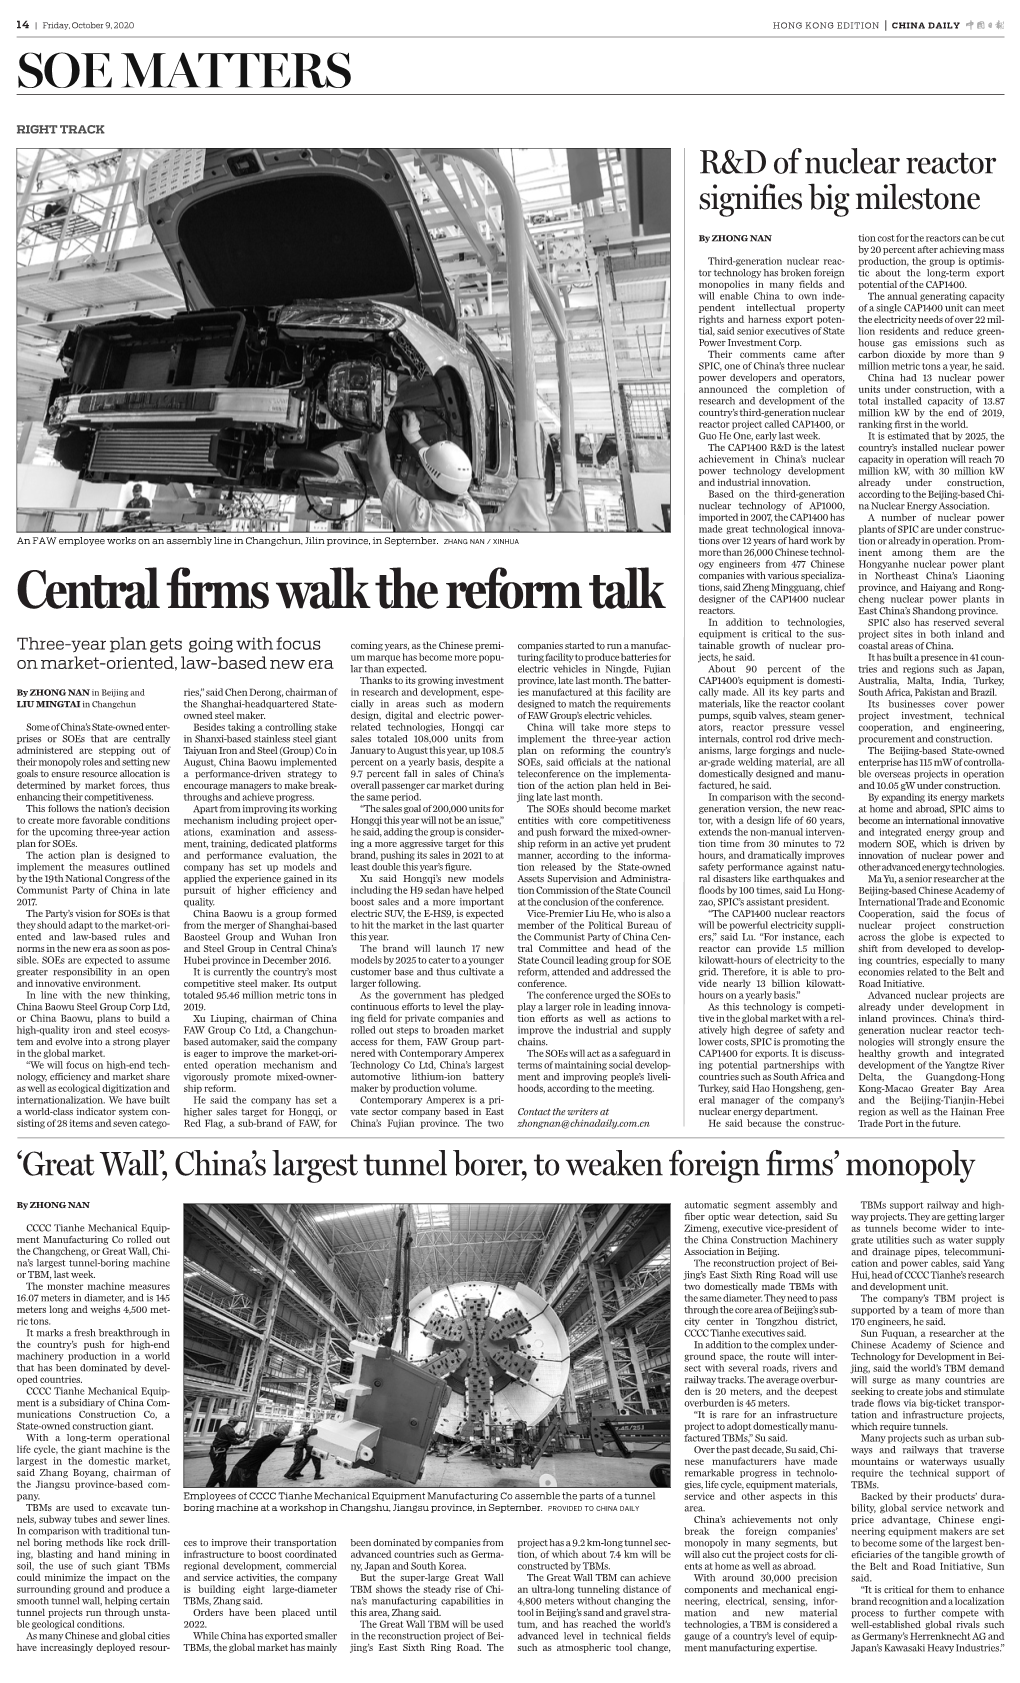 Central Firms Walk the Reform Talk Reactors